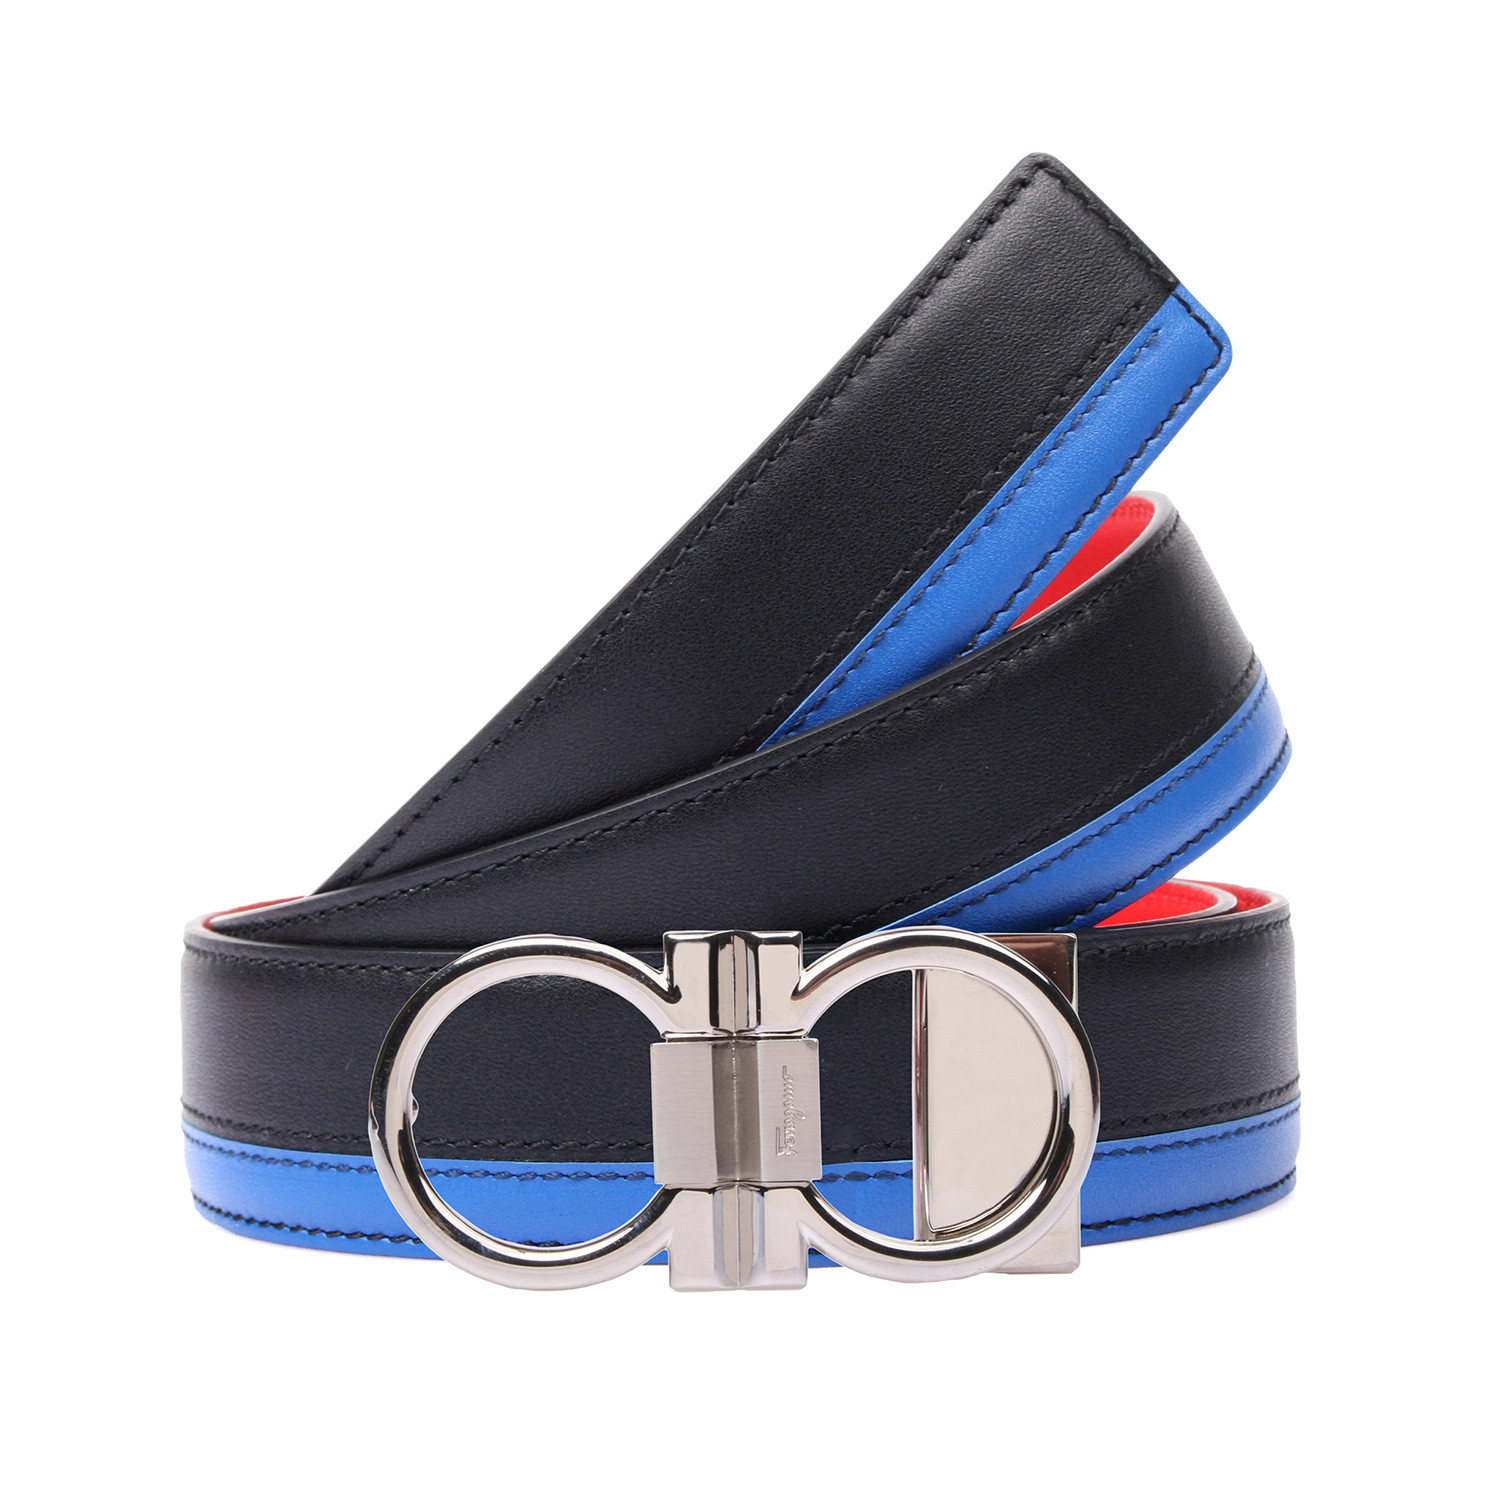 monogram belt blue